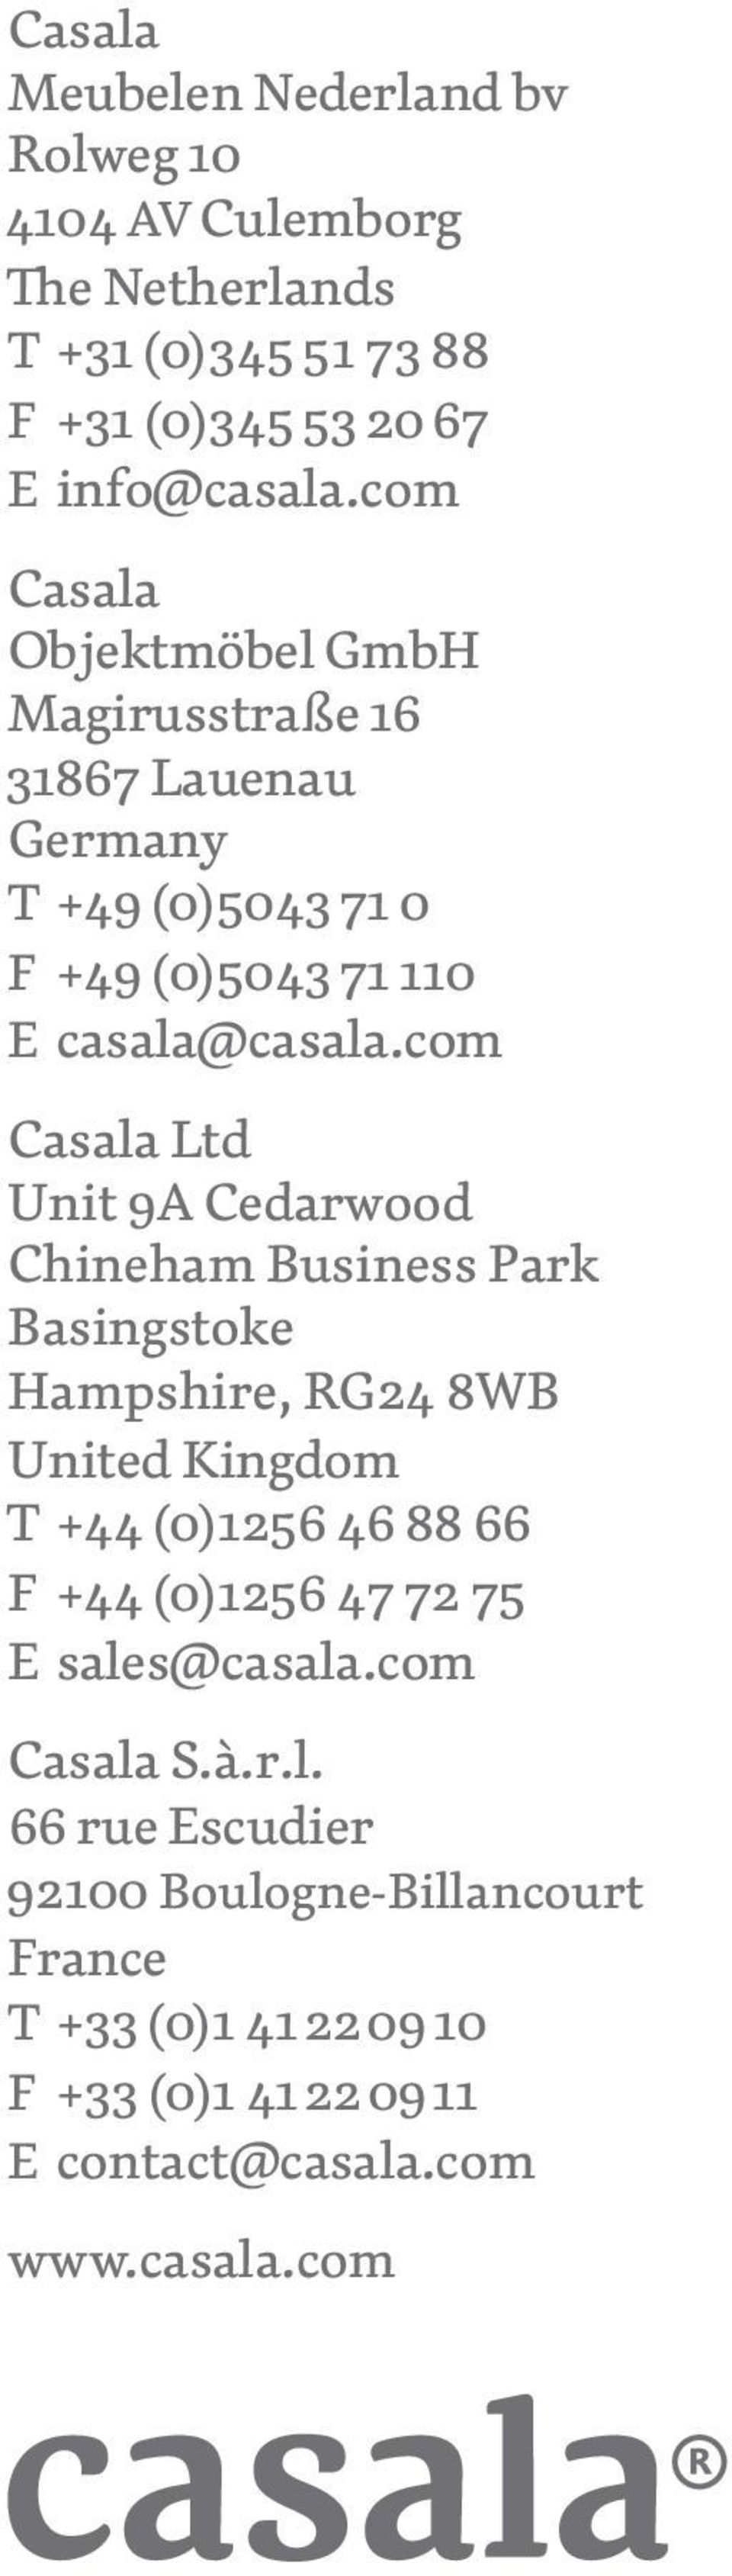 com Casala Ltd Unit 9A Cedarwood Chineham Business Park Basingstoke Hampshire, RG24 8WB United Kingdom T +44 (0)1256 46 88 66 F +44 (0)1256 47 72 75 E sales@casala.com Casala S.